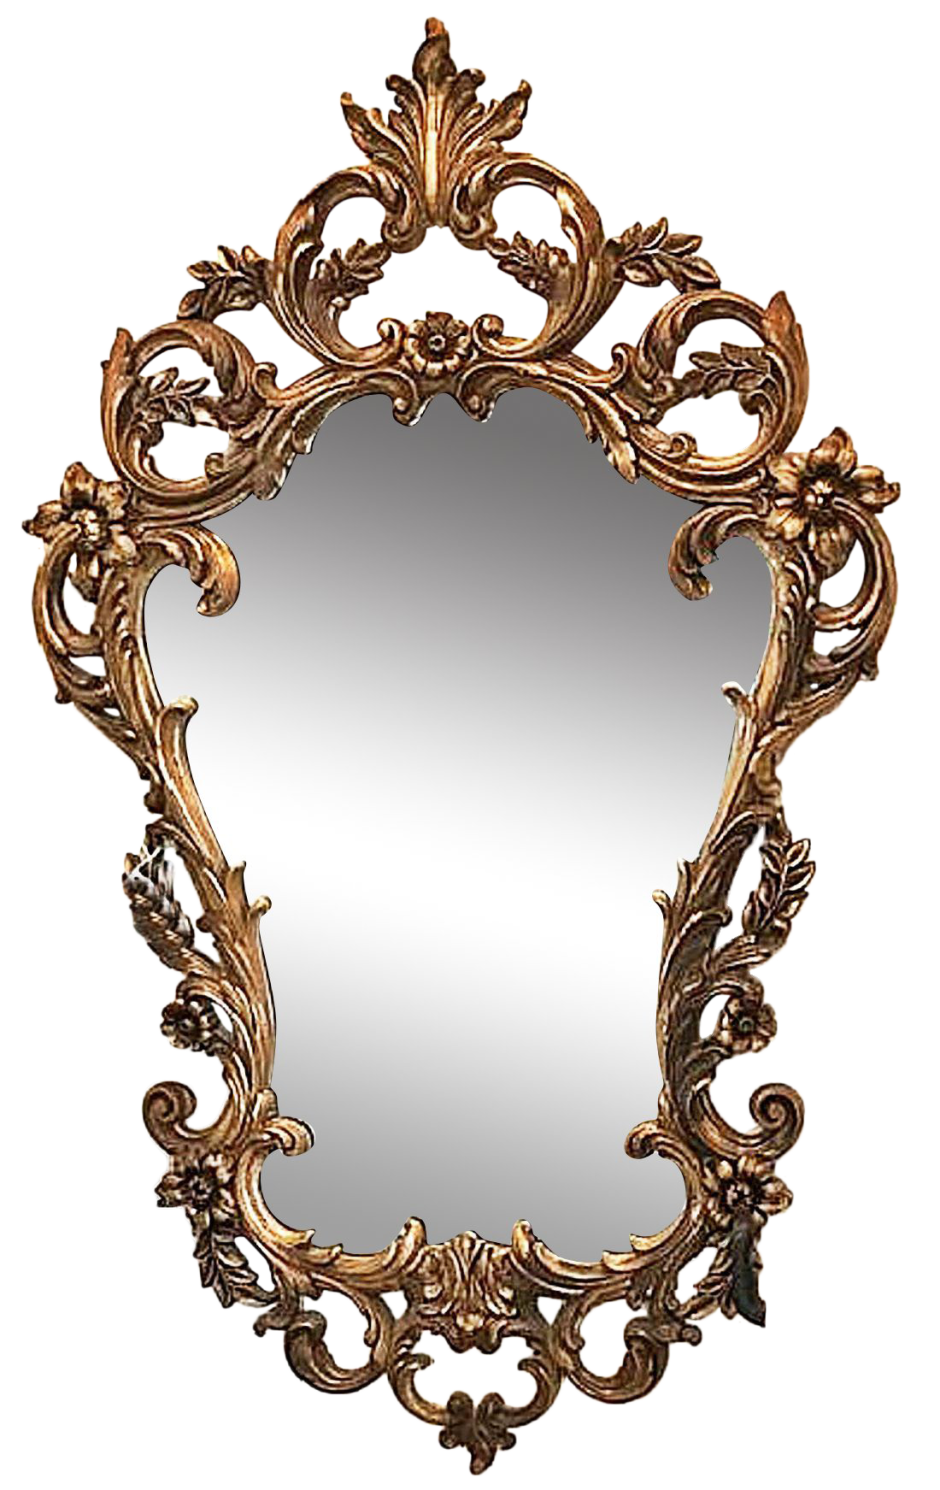 Vintage mirror frame